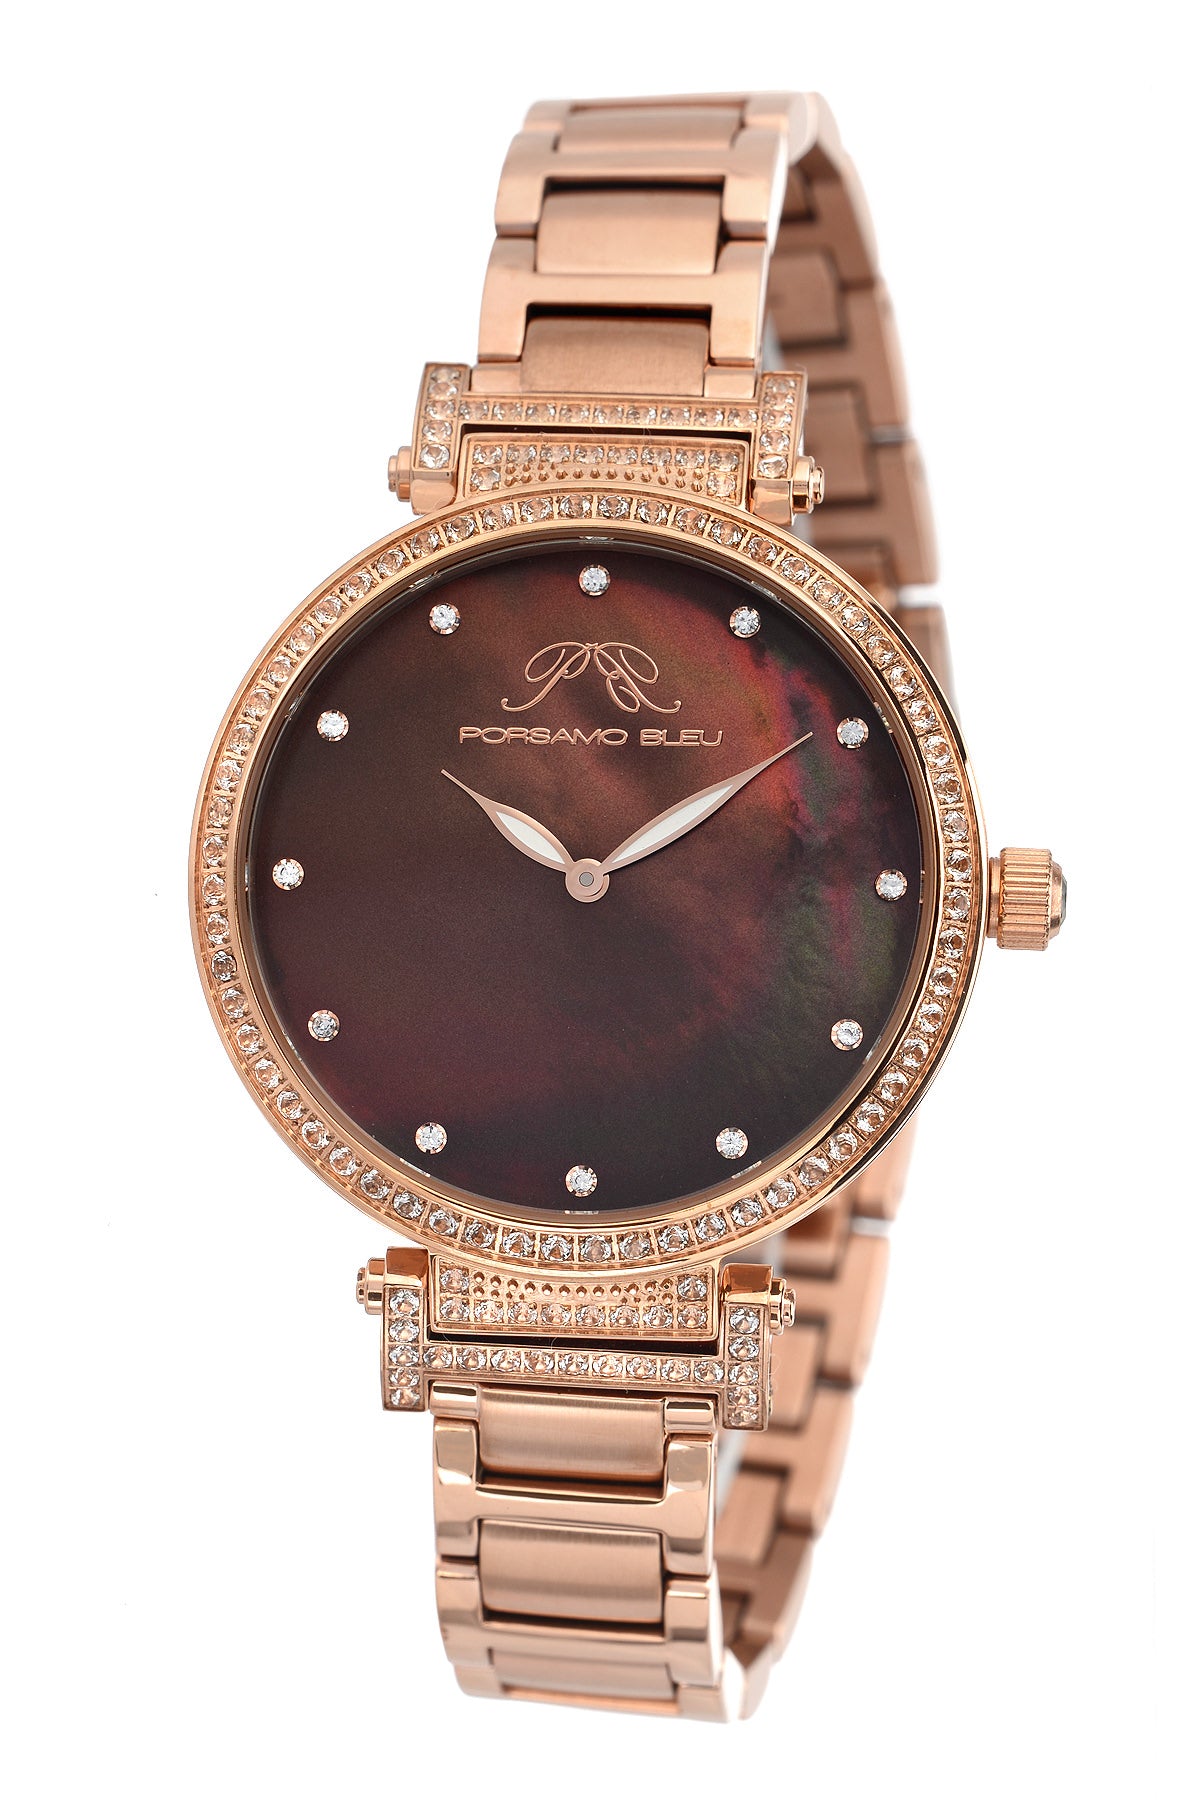 Porsamo Bleu Chantal luxury topaz women's stainless steel watch, rose, brown 672CCHS